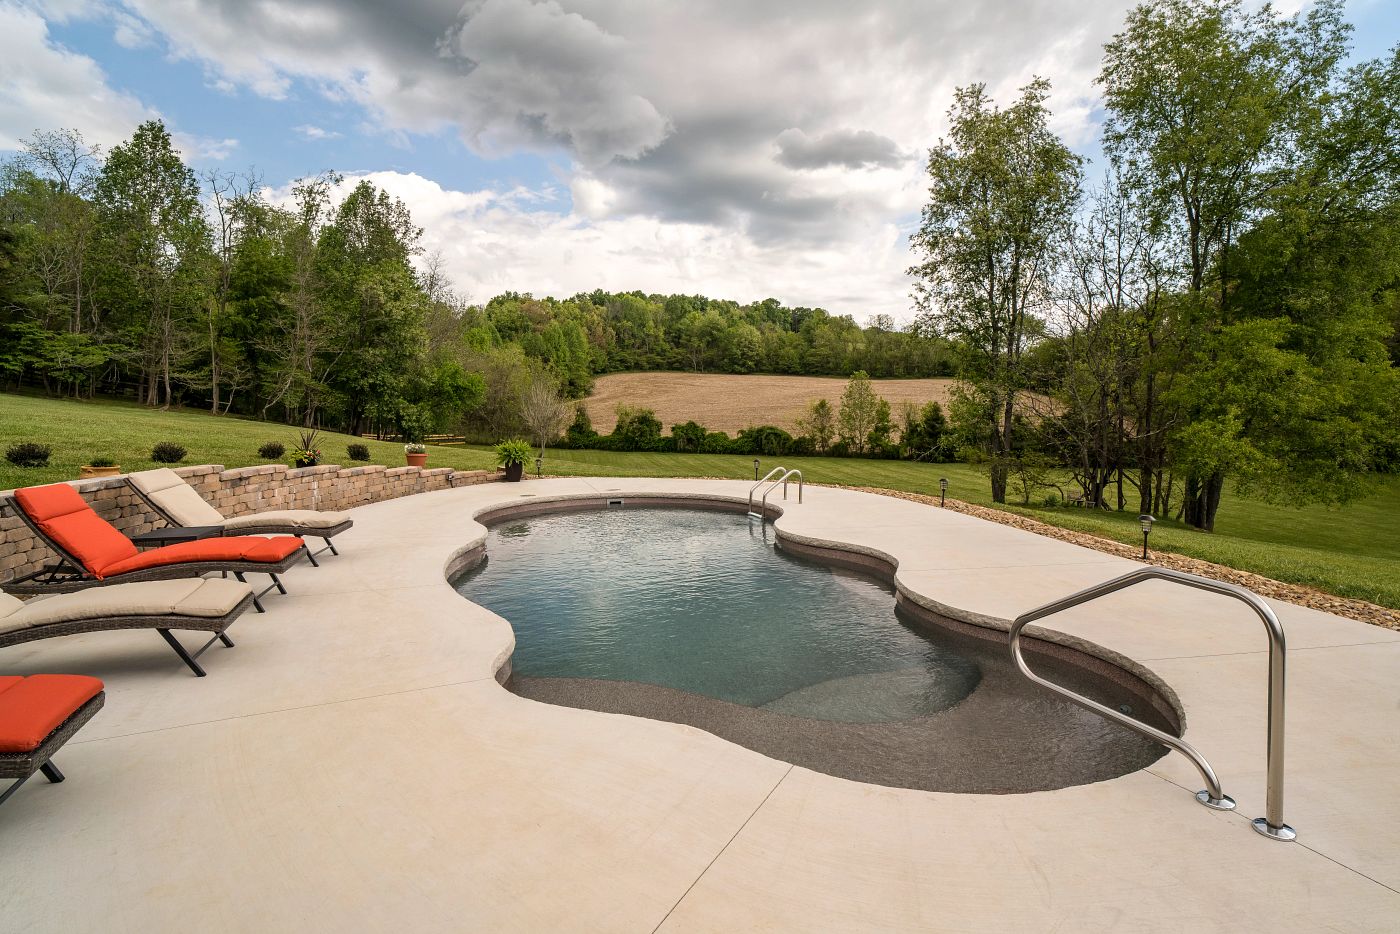 large freeform fiberglass pool in a spacious southern backyard